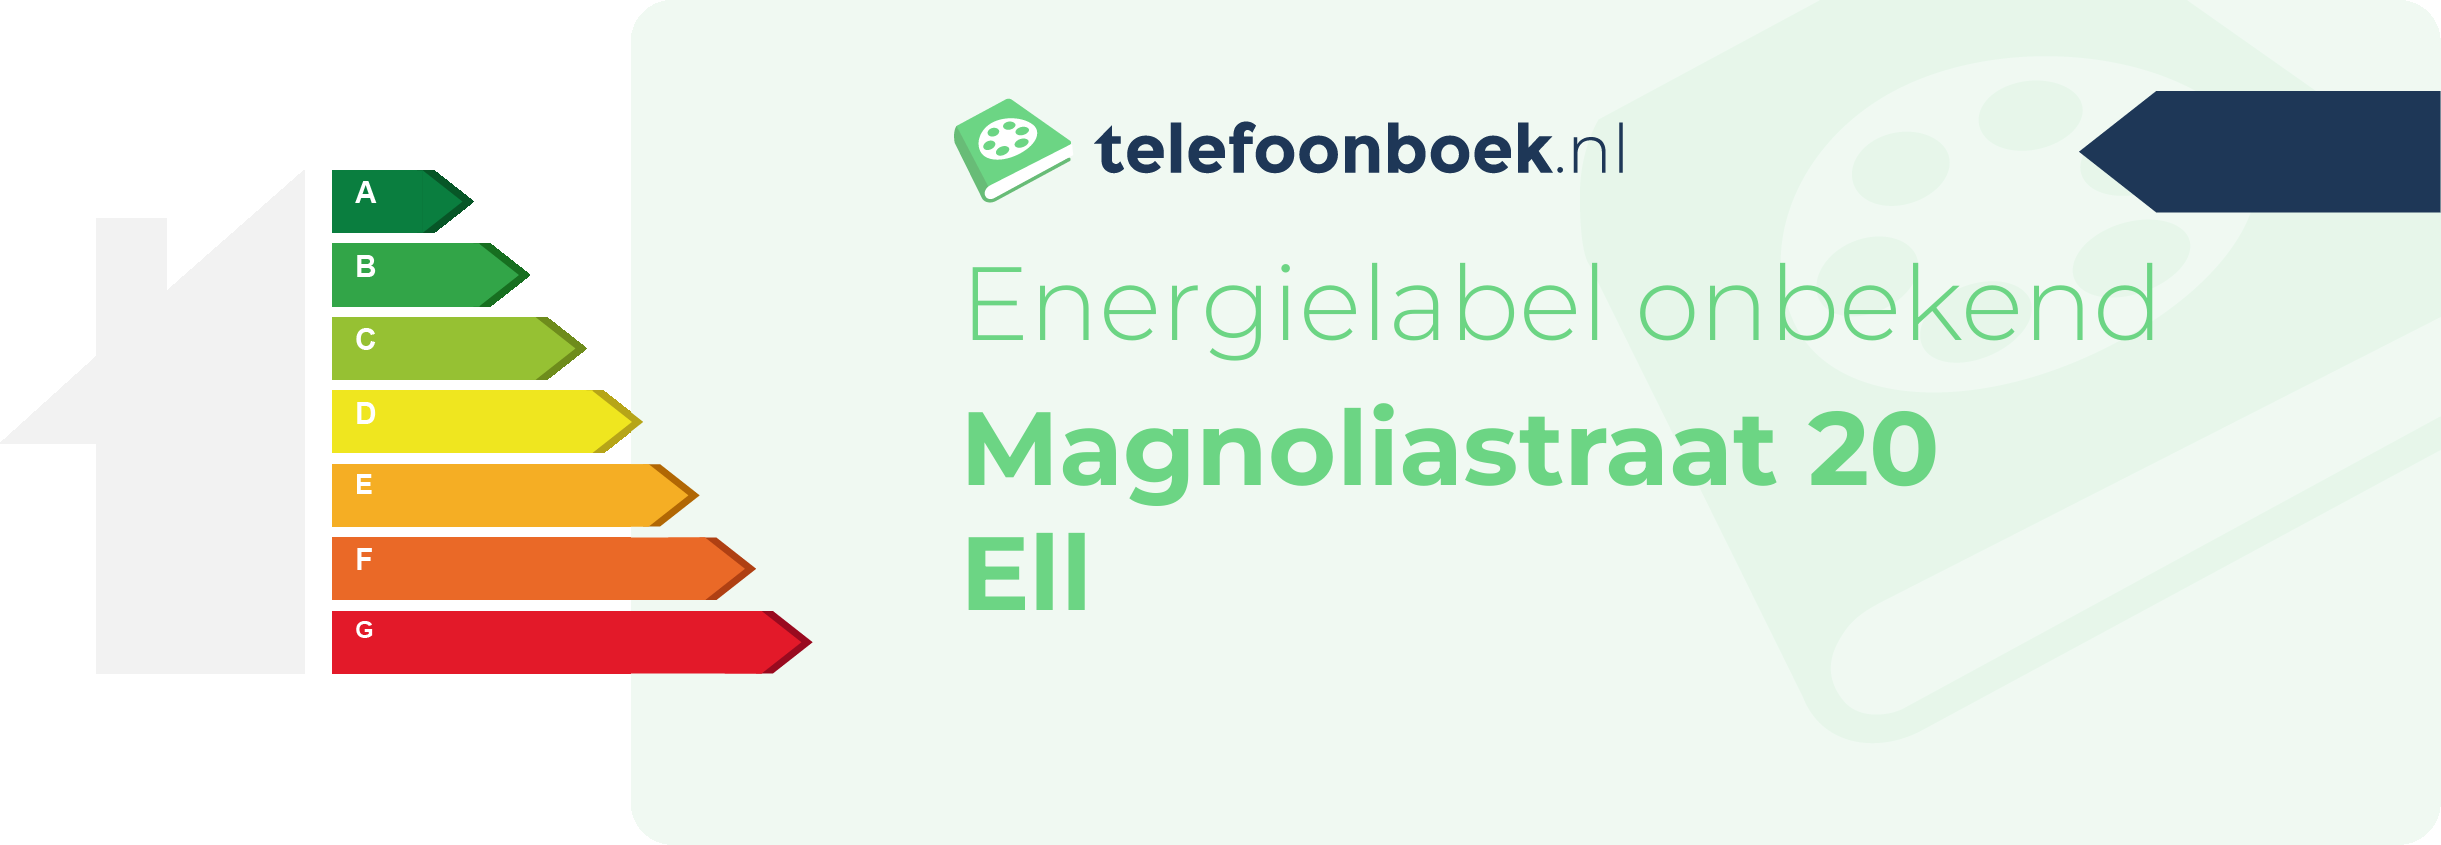 Energielabel Magnoliastraat 20 Ell